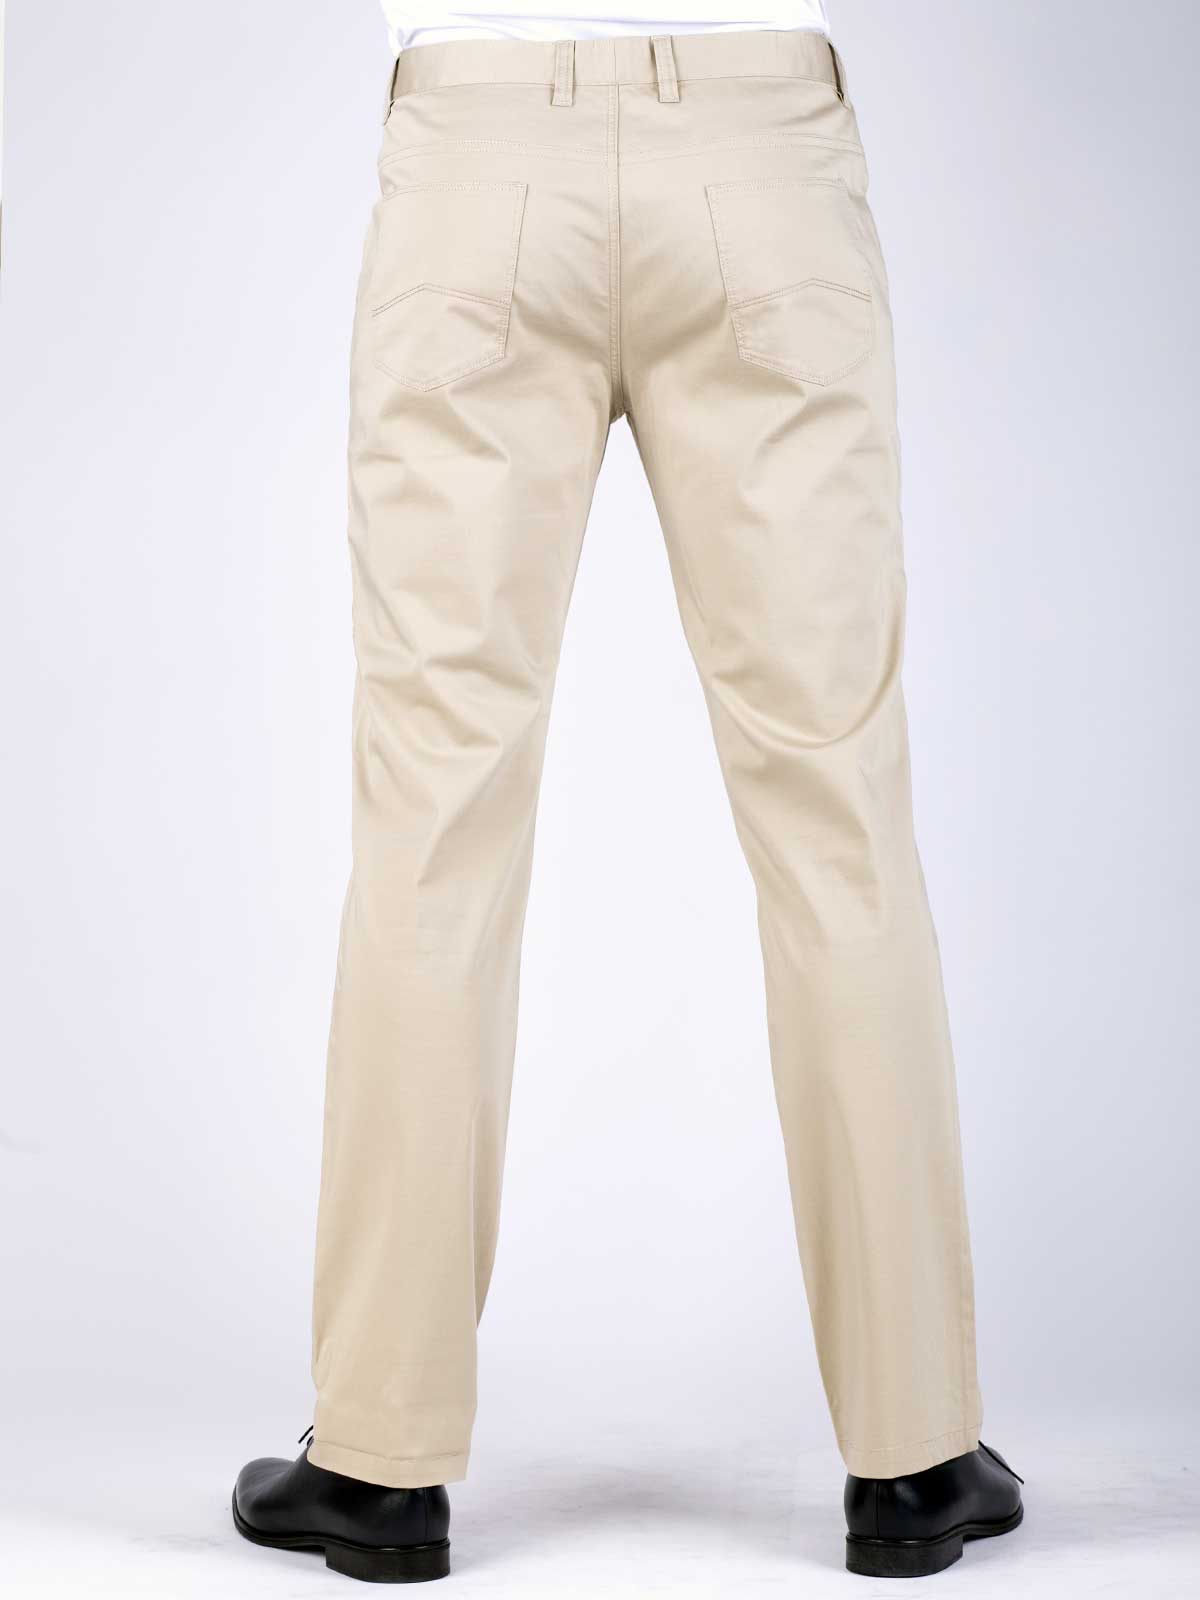 Pants in light beige - 63163 € 11.25 img2